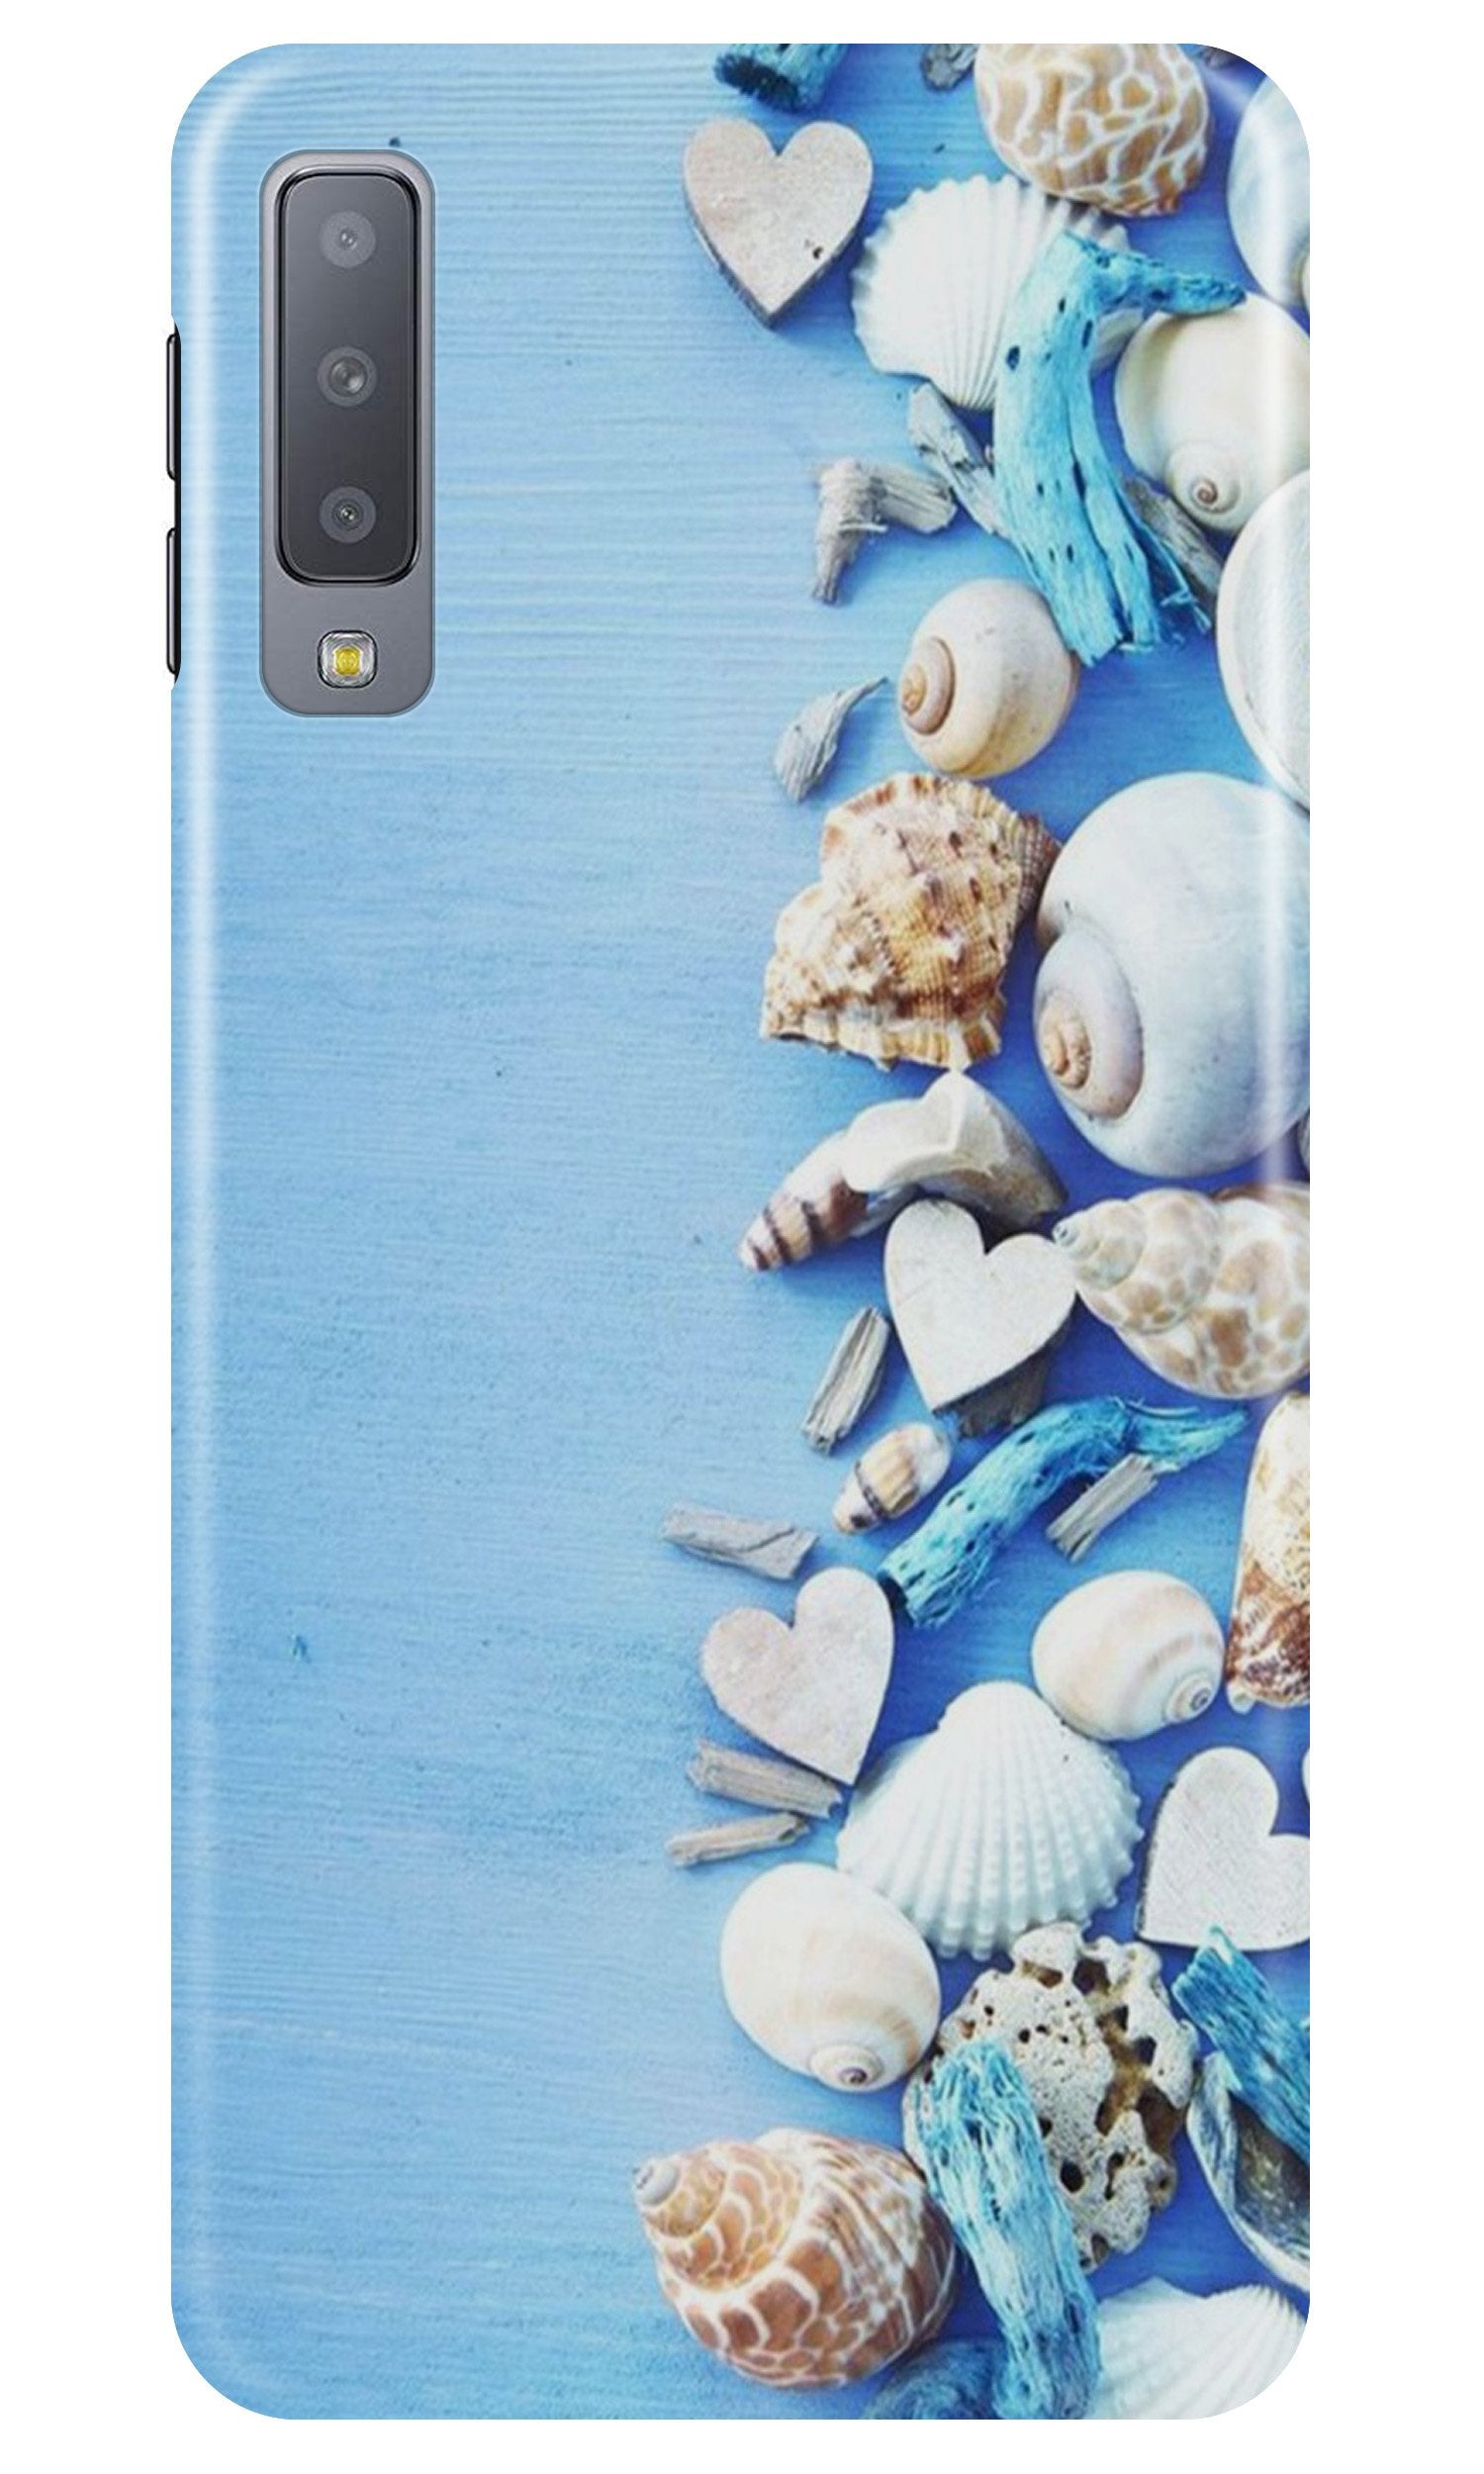 Sea Shells2 Case for Samsung Galaxy A30s